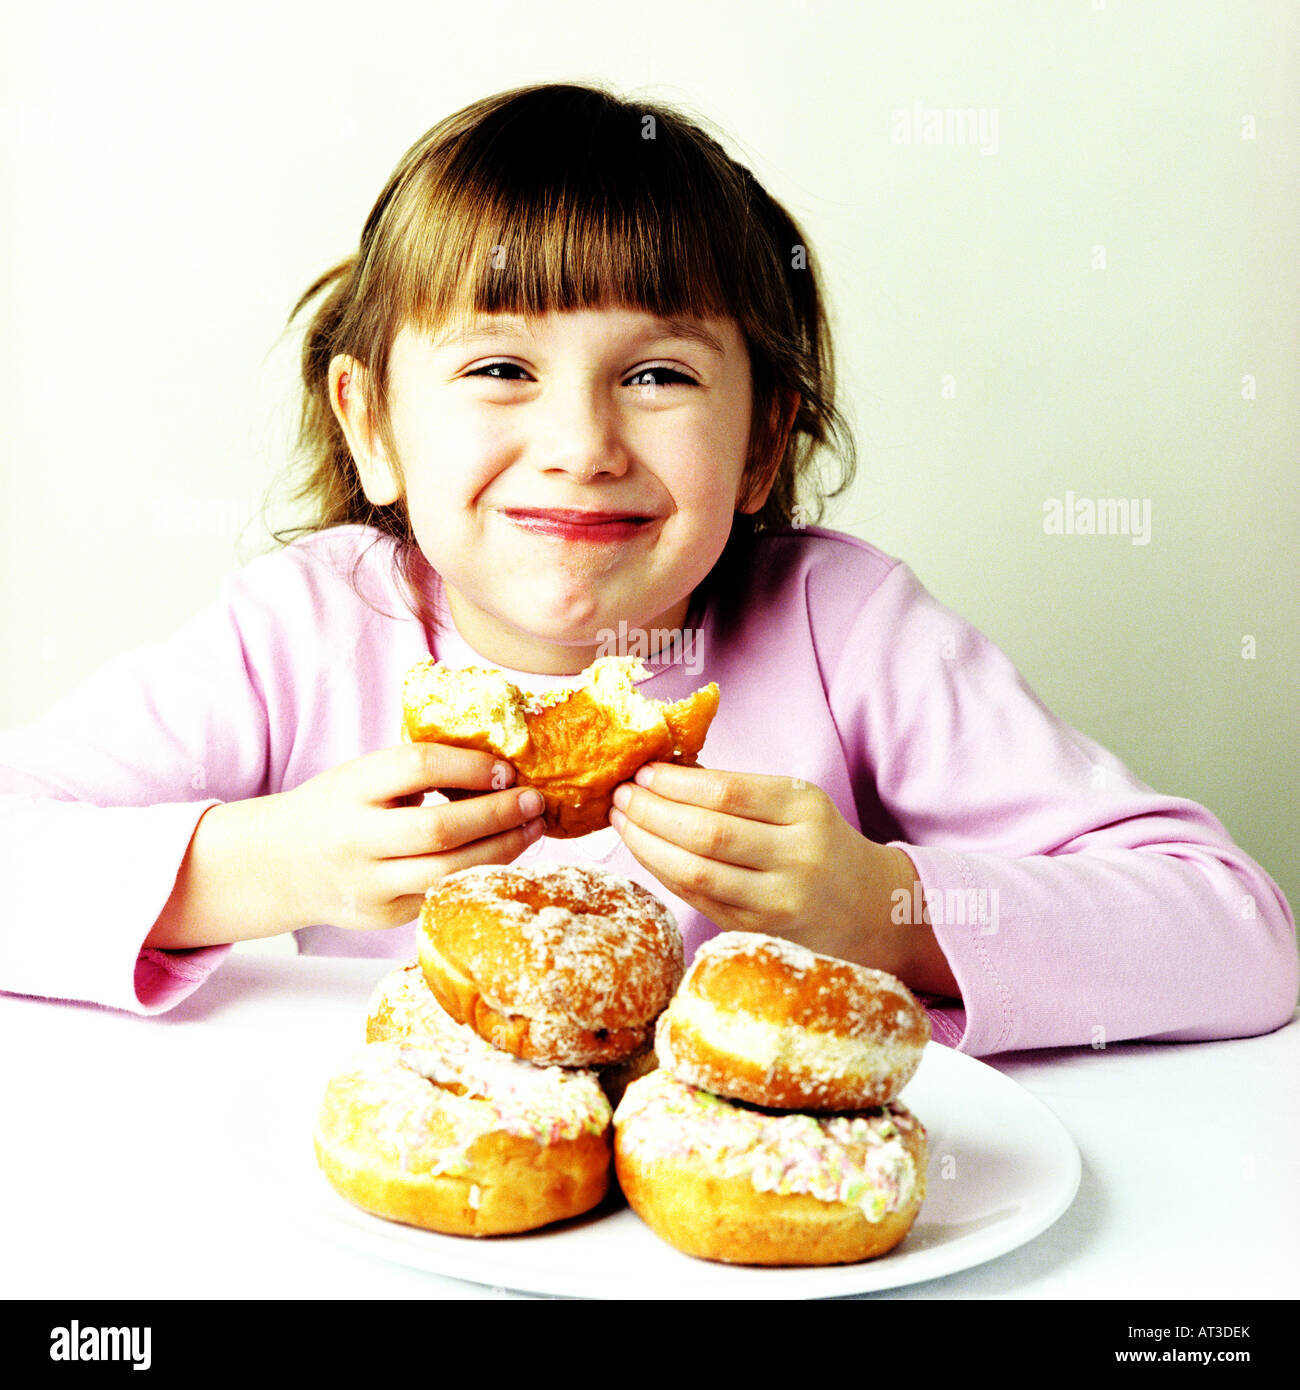 A small girl eating doughnuts Stock Photo